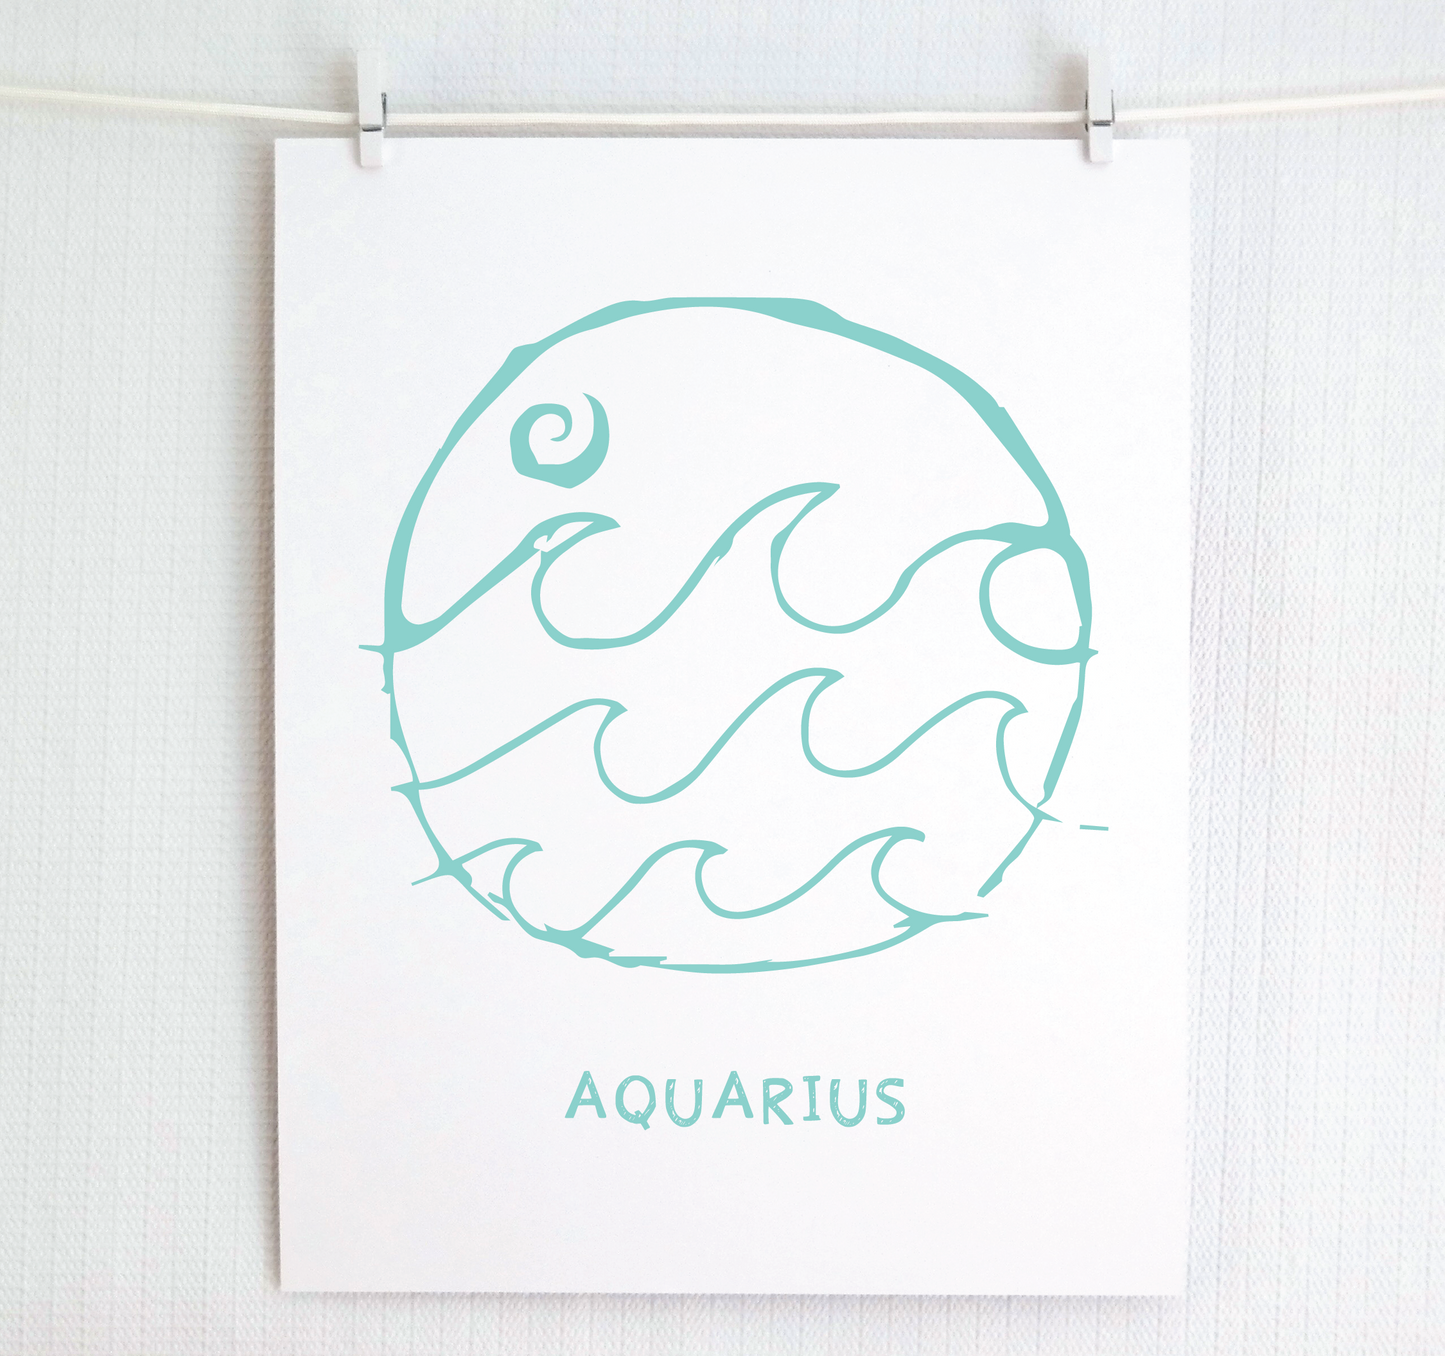 Signs of the Zodiac: AQUARIUS